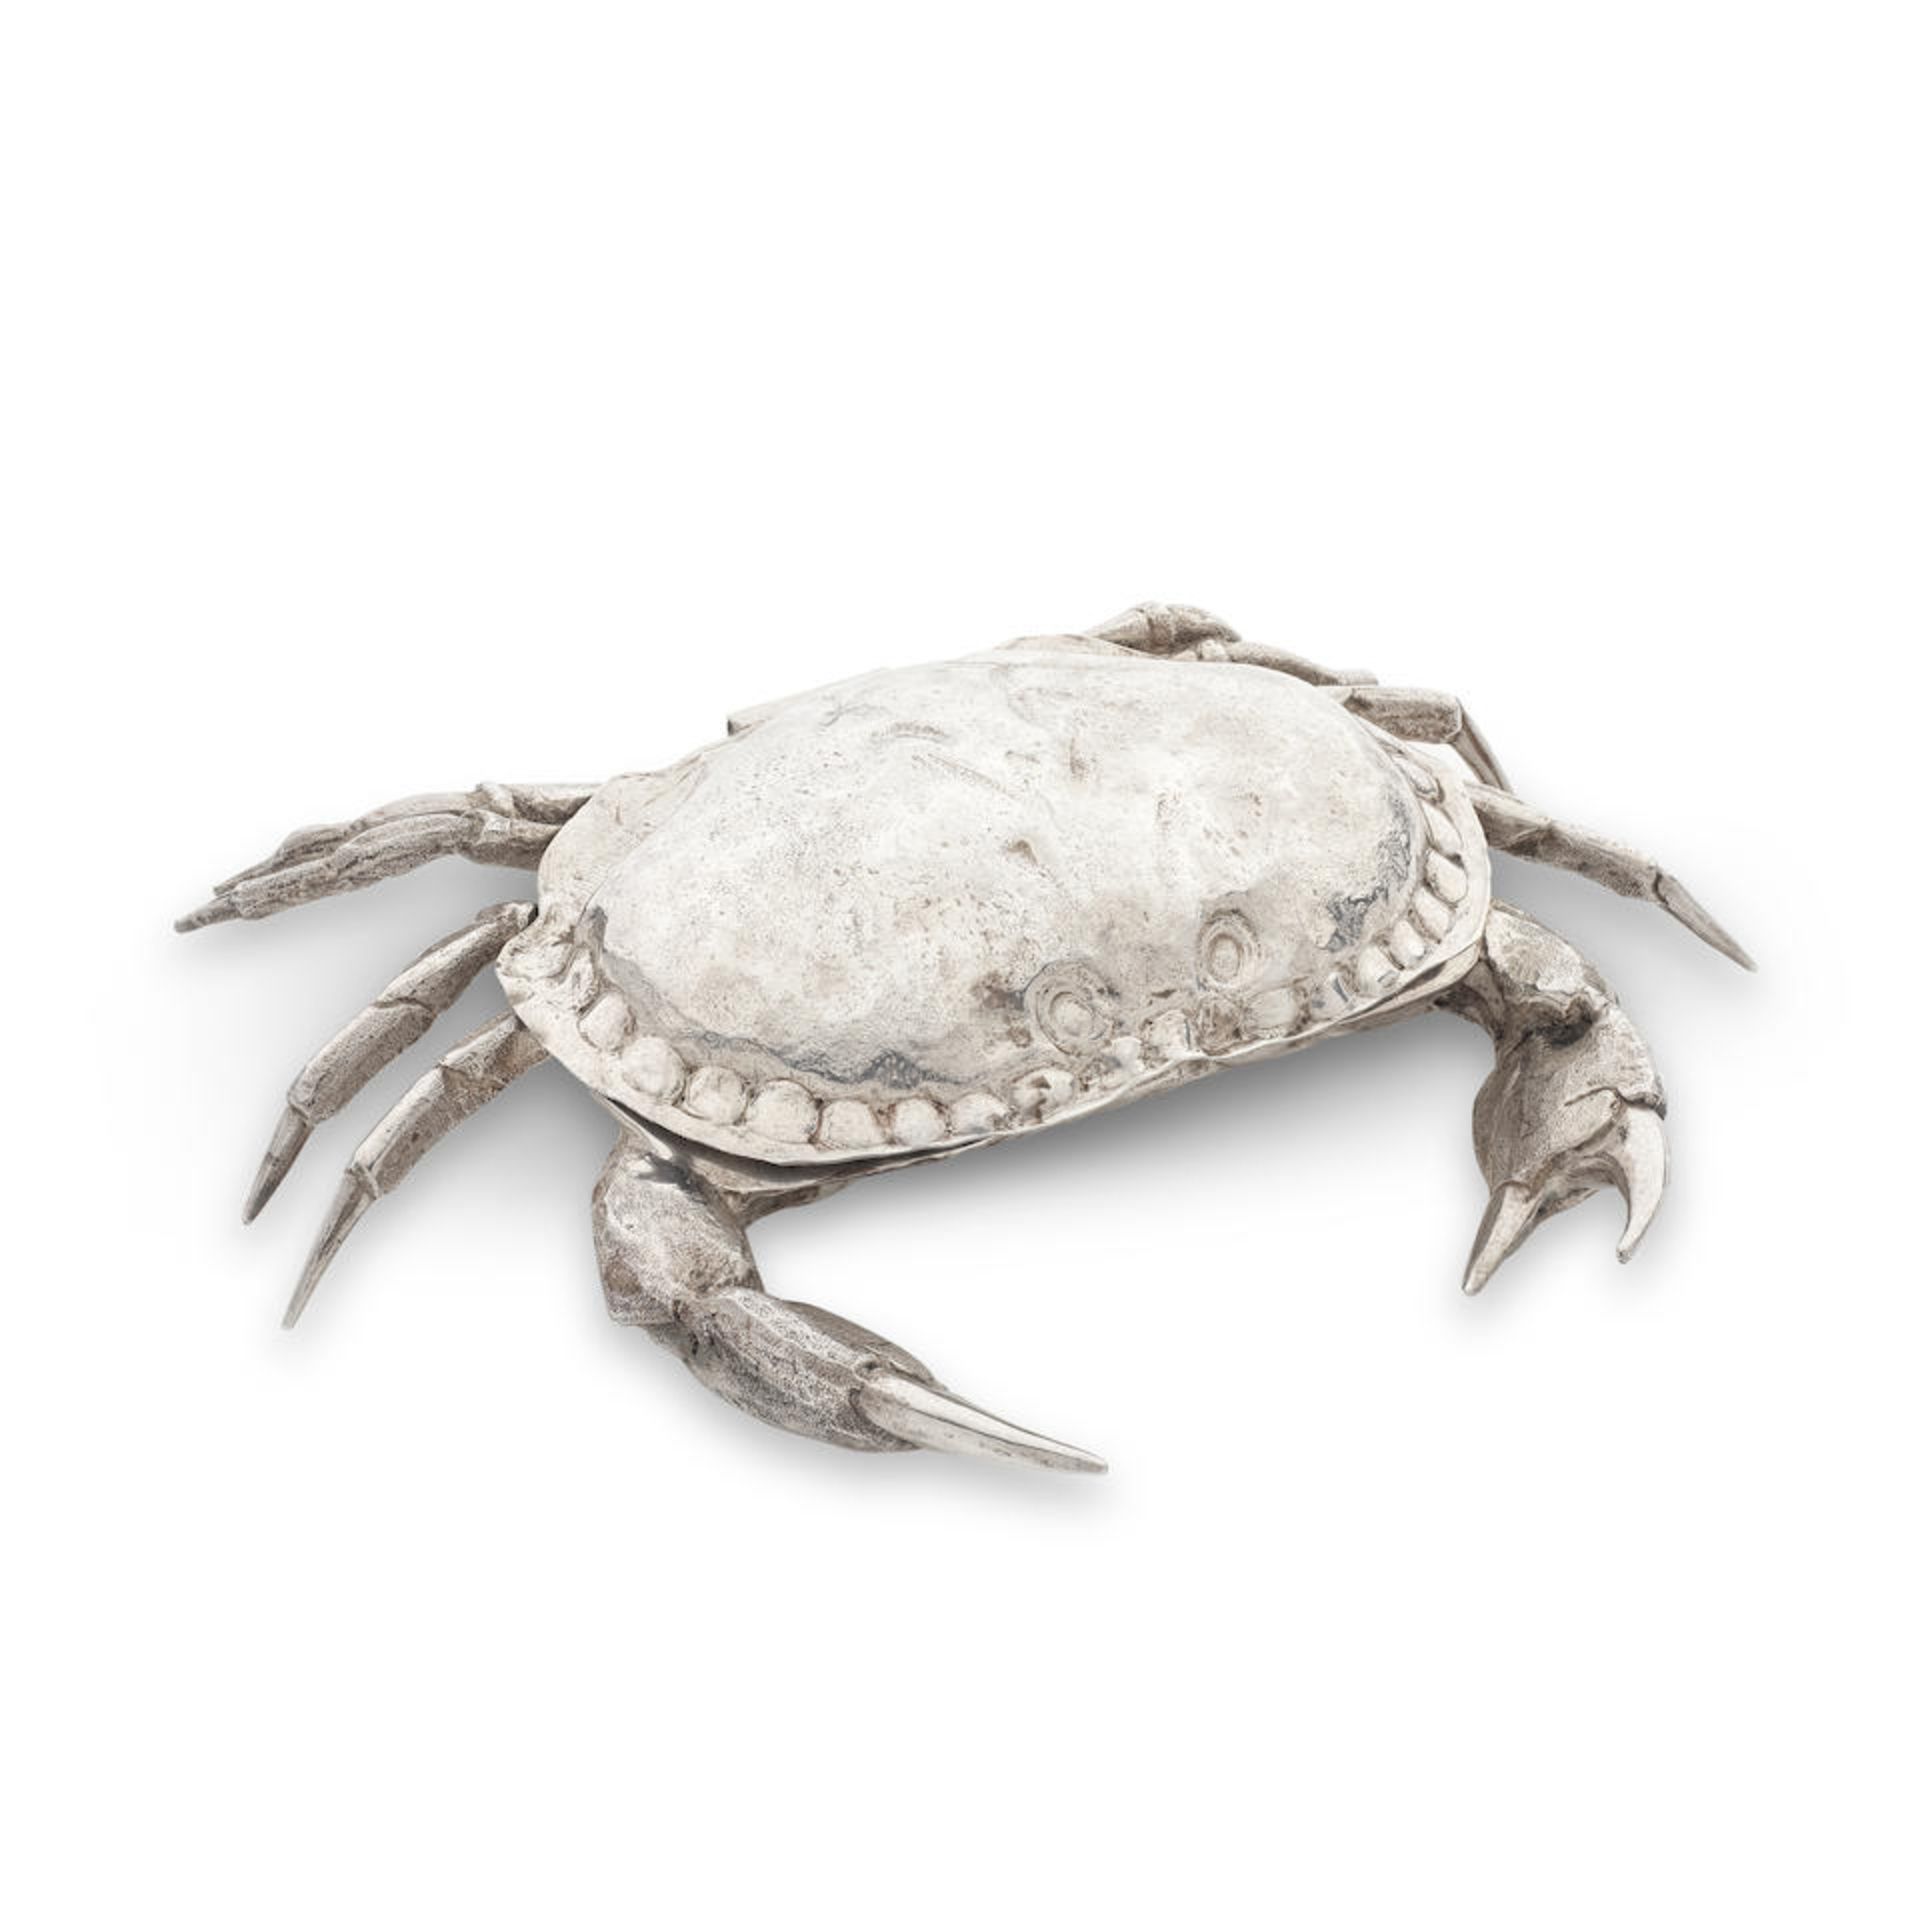 A novelty silver plated caviar dish modelled a crab Franco Lapini, Italian, circa 1980 - Image 2 of 2